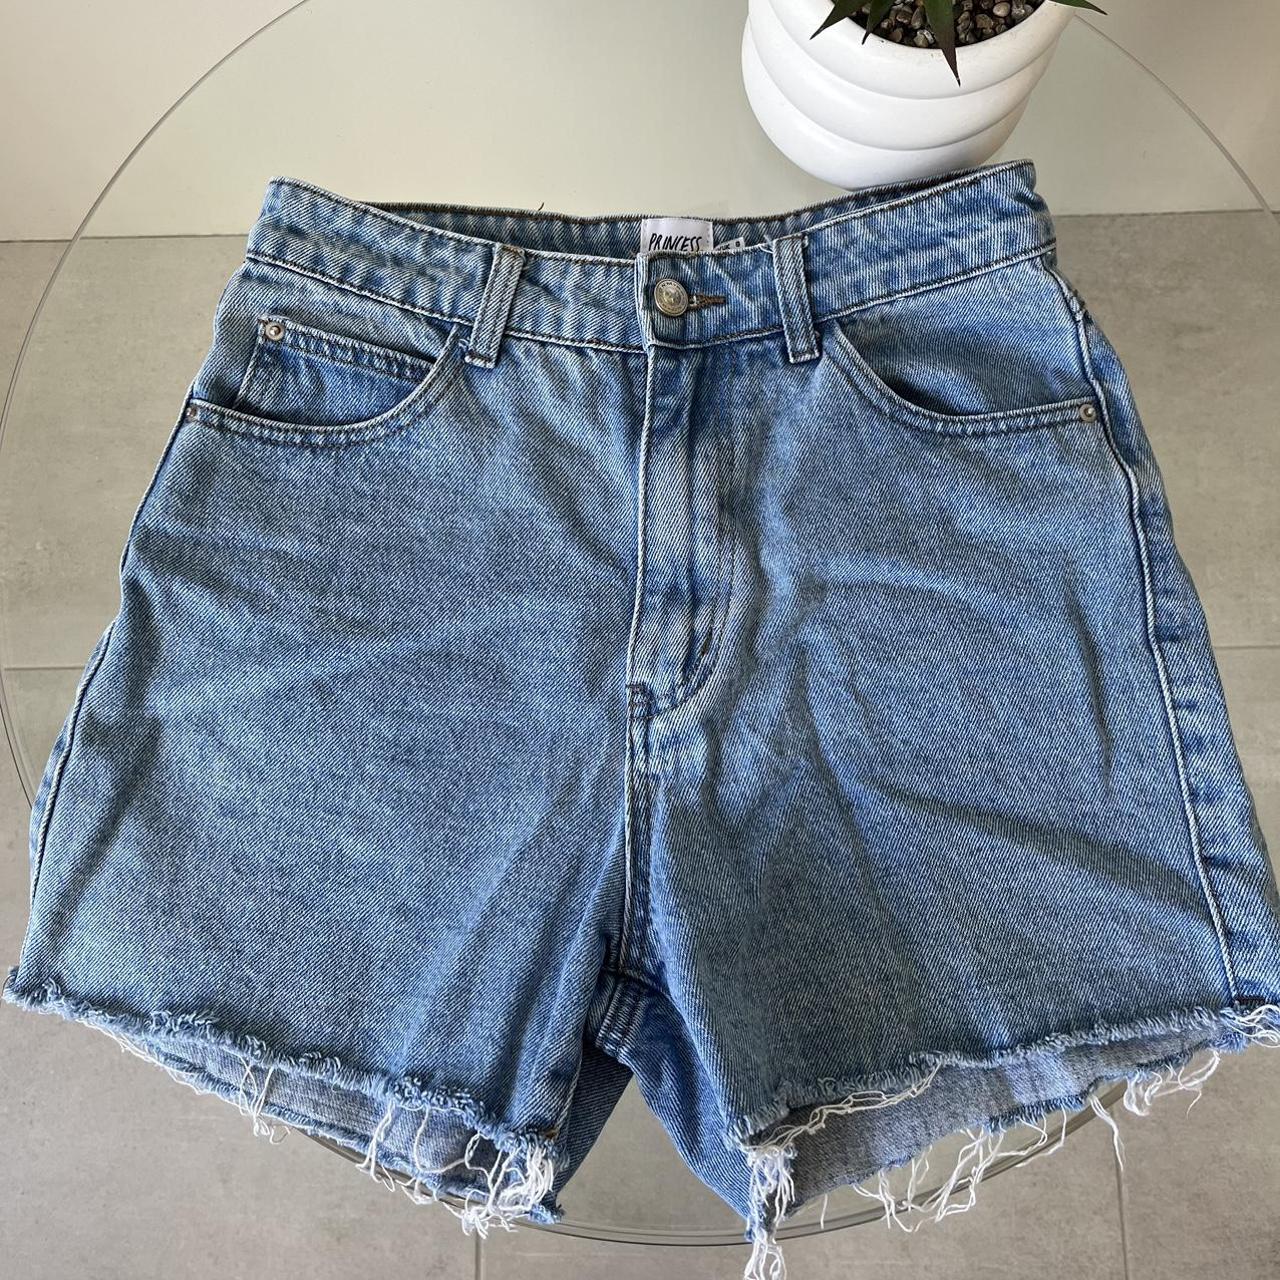 PRINCESS POLLY - Blue Denim Shorts. RRP $30. Size 8,... - Depop